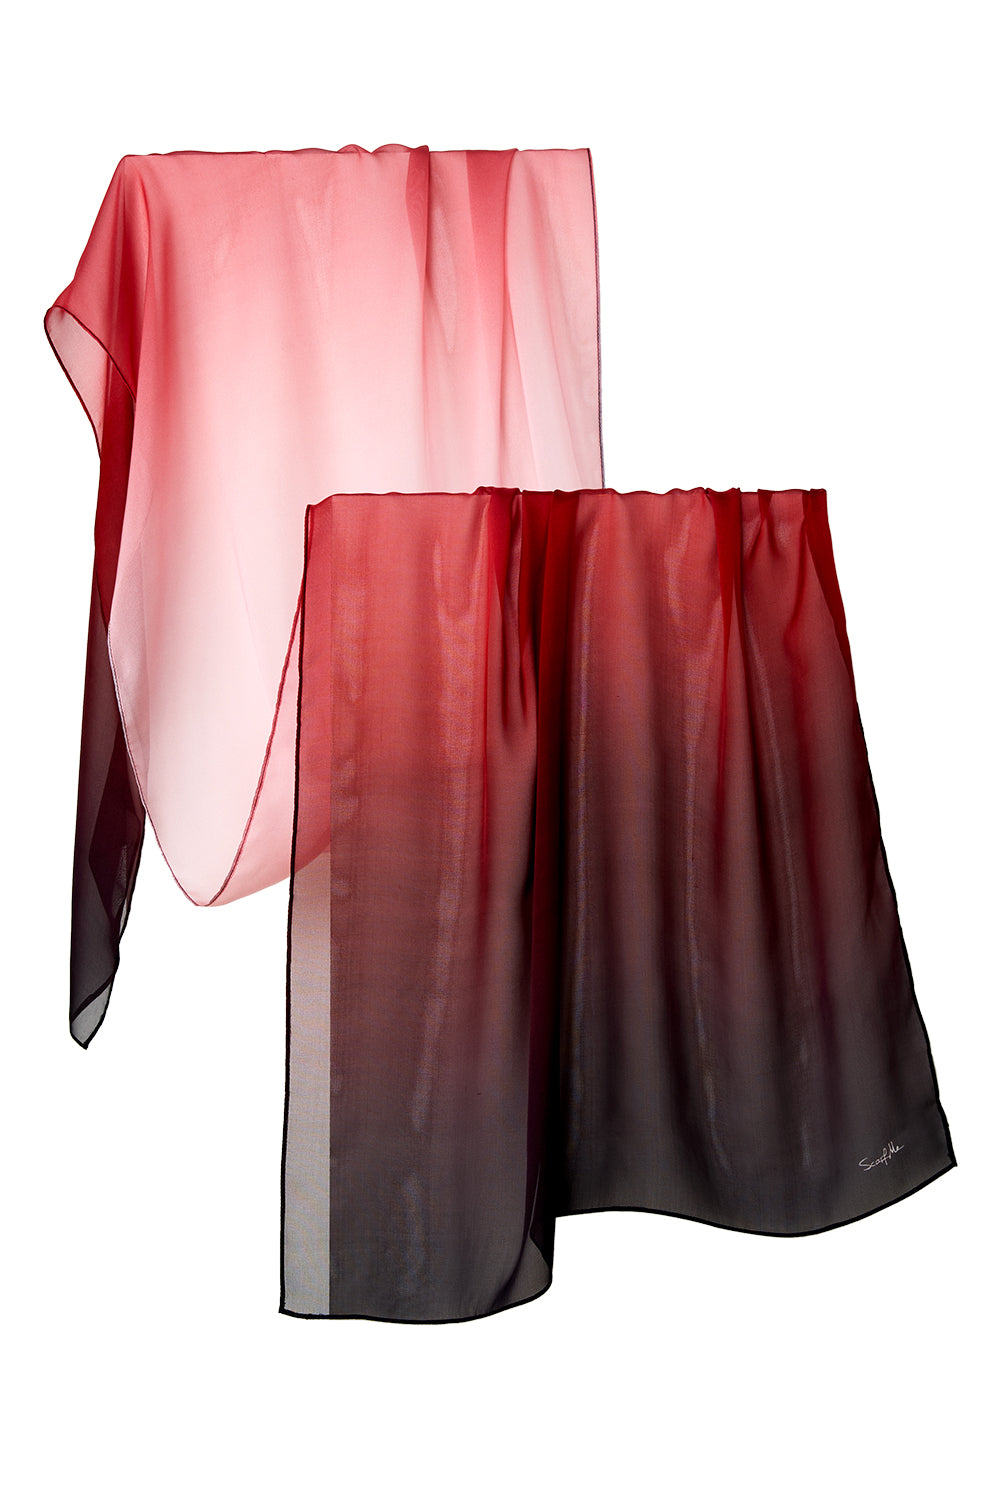 Red gradient scarf in silk mousseline | 60x210cm